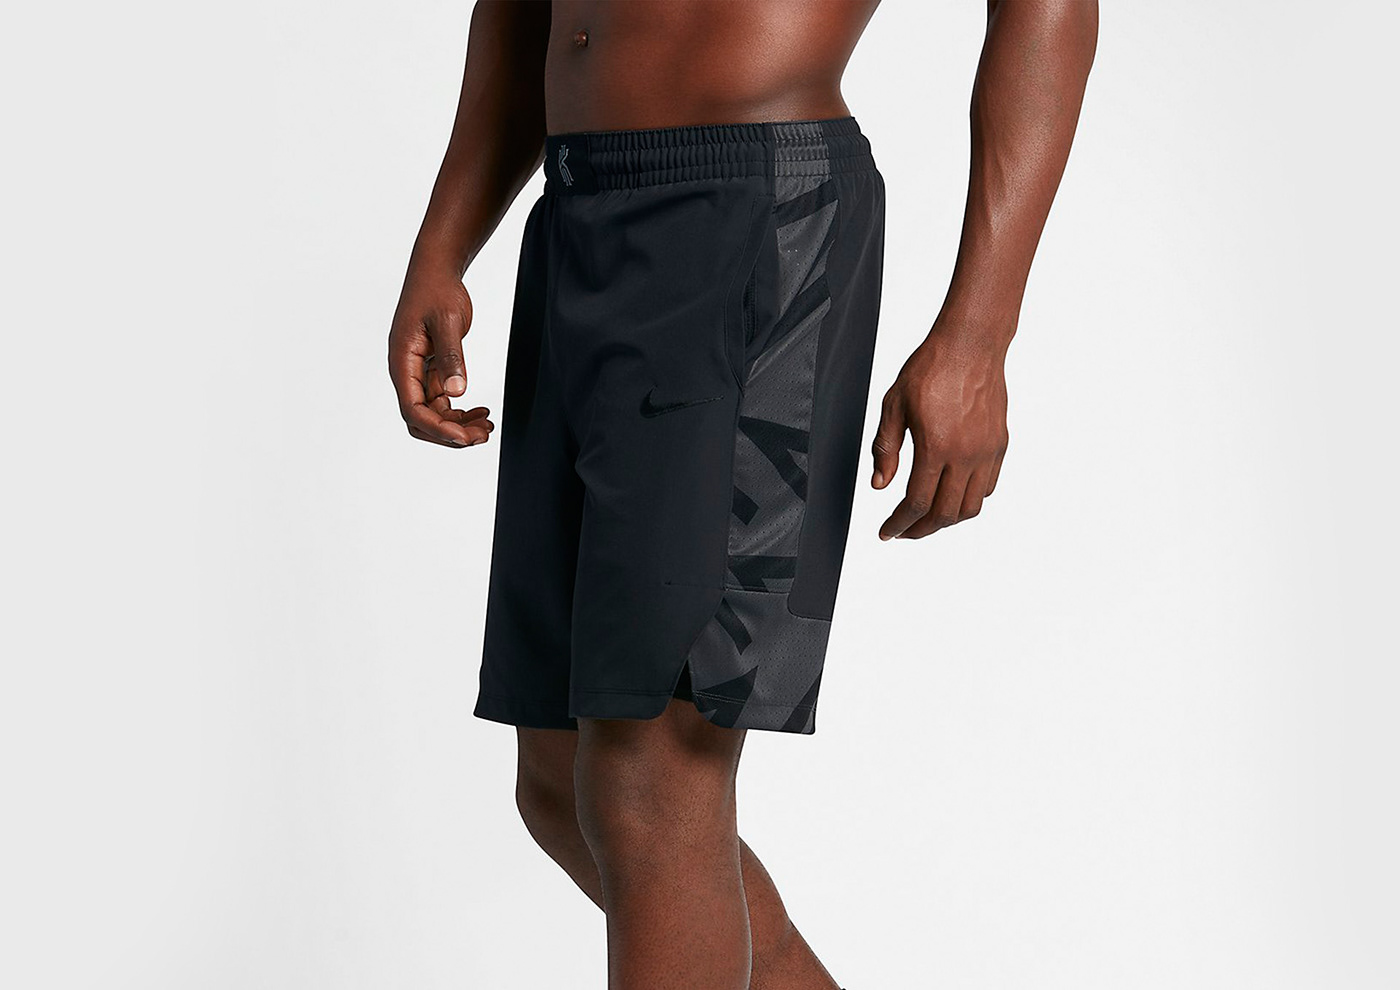 Nike basket kyrie irving hoodie texture pattern apparel design lines black & white